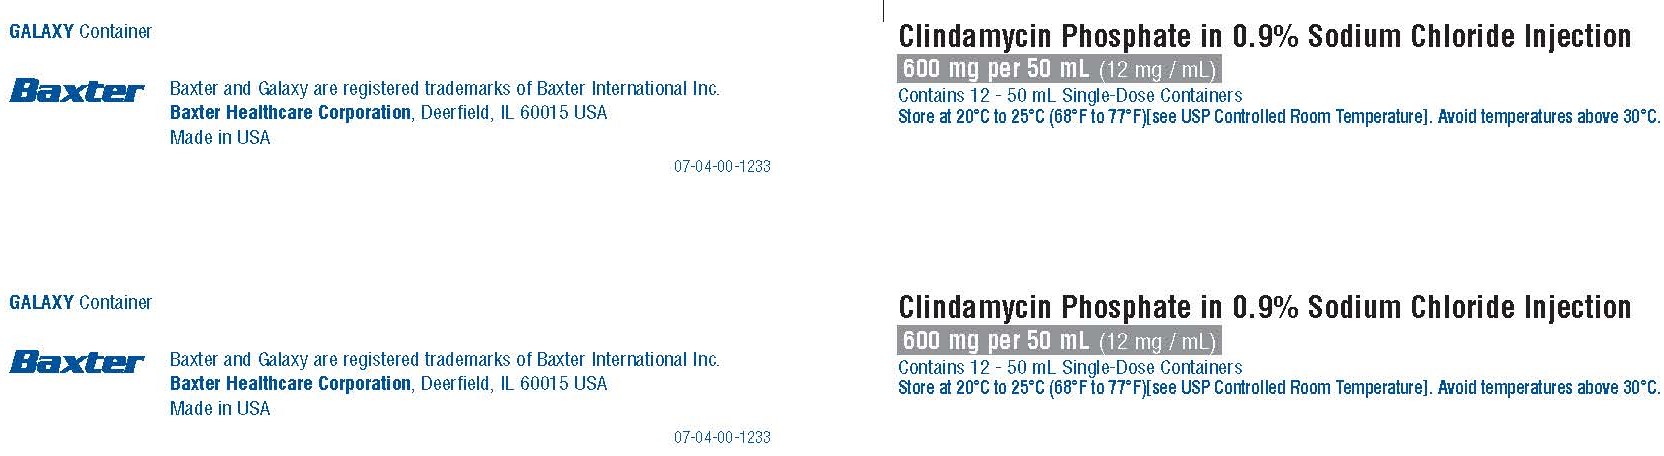 Clindamycin Phosphate in Sod. Chlor. carton NDC 0338-9549-24 panel 1 of 2